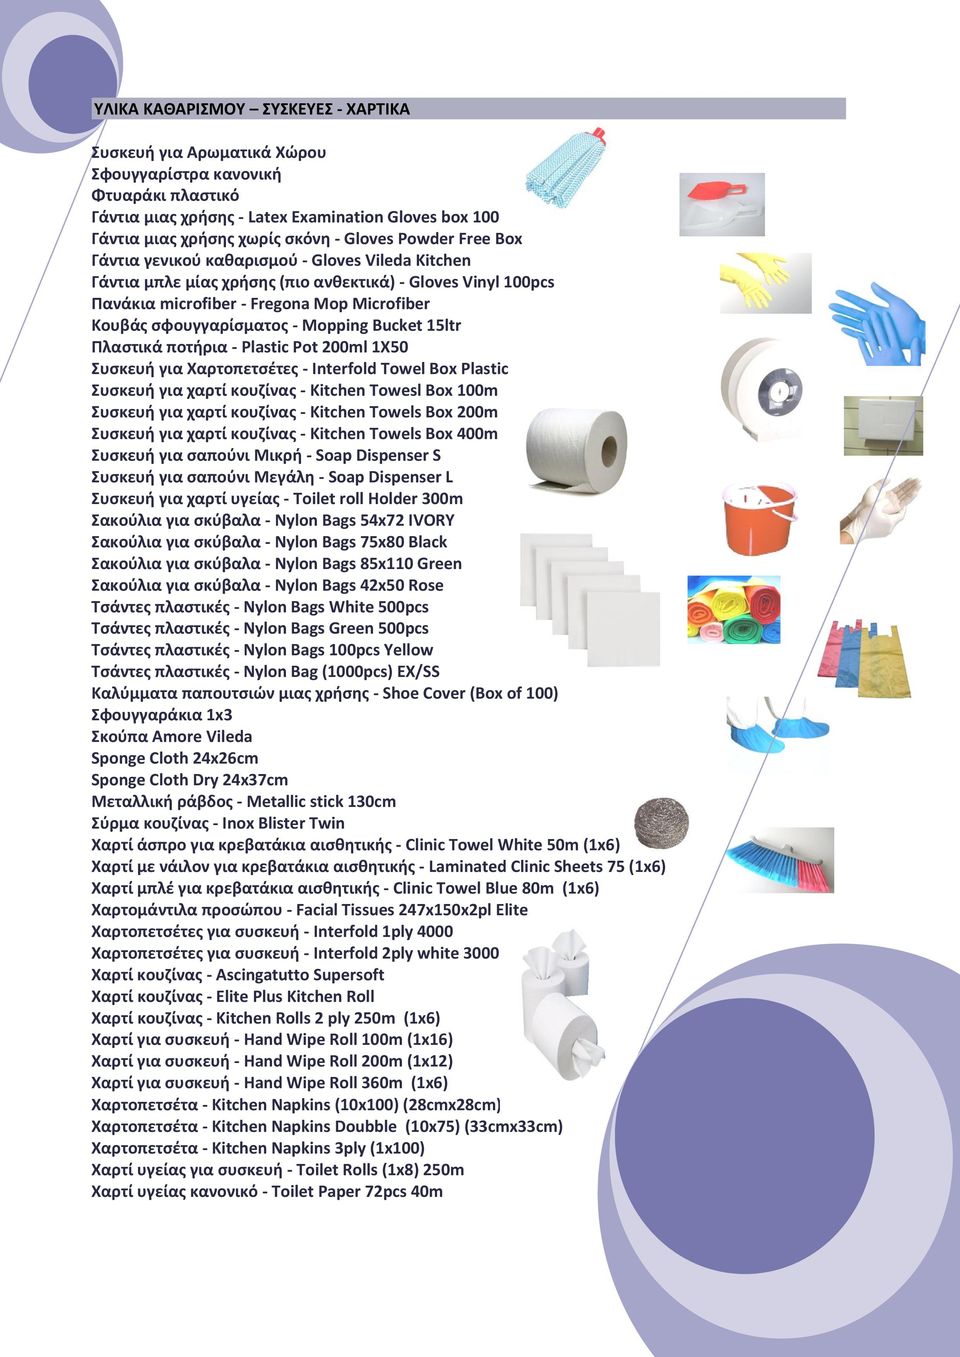 Microfiber 5,00 Κουβάς σφουγγαρίσματος - Mopping Bucket 15ltr 14,00 Πλαστικά ποτήρια - Plastic Pot 200ml 1X50 1,50 Συσκευή για Χαρτοπετσέτες - Interfold Towel Box Plastic 32,00 Συσκευή για χαρτί